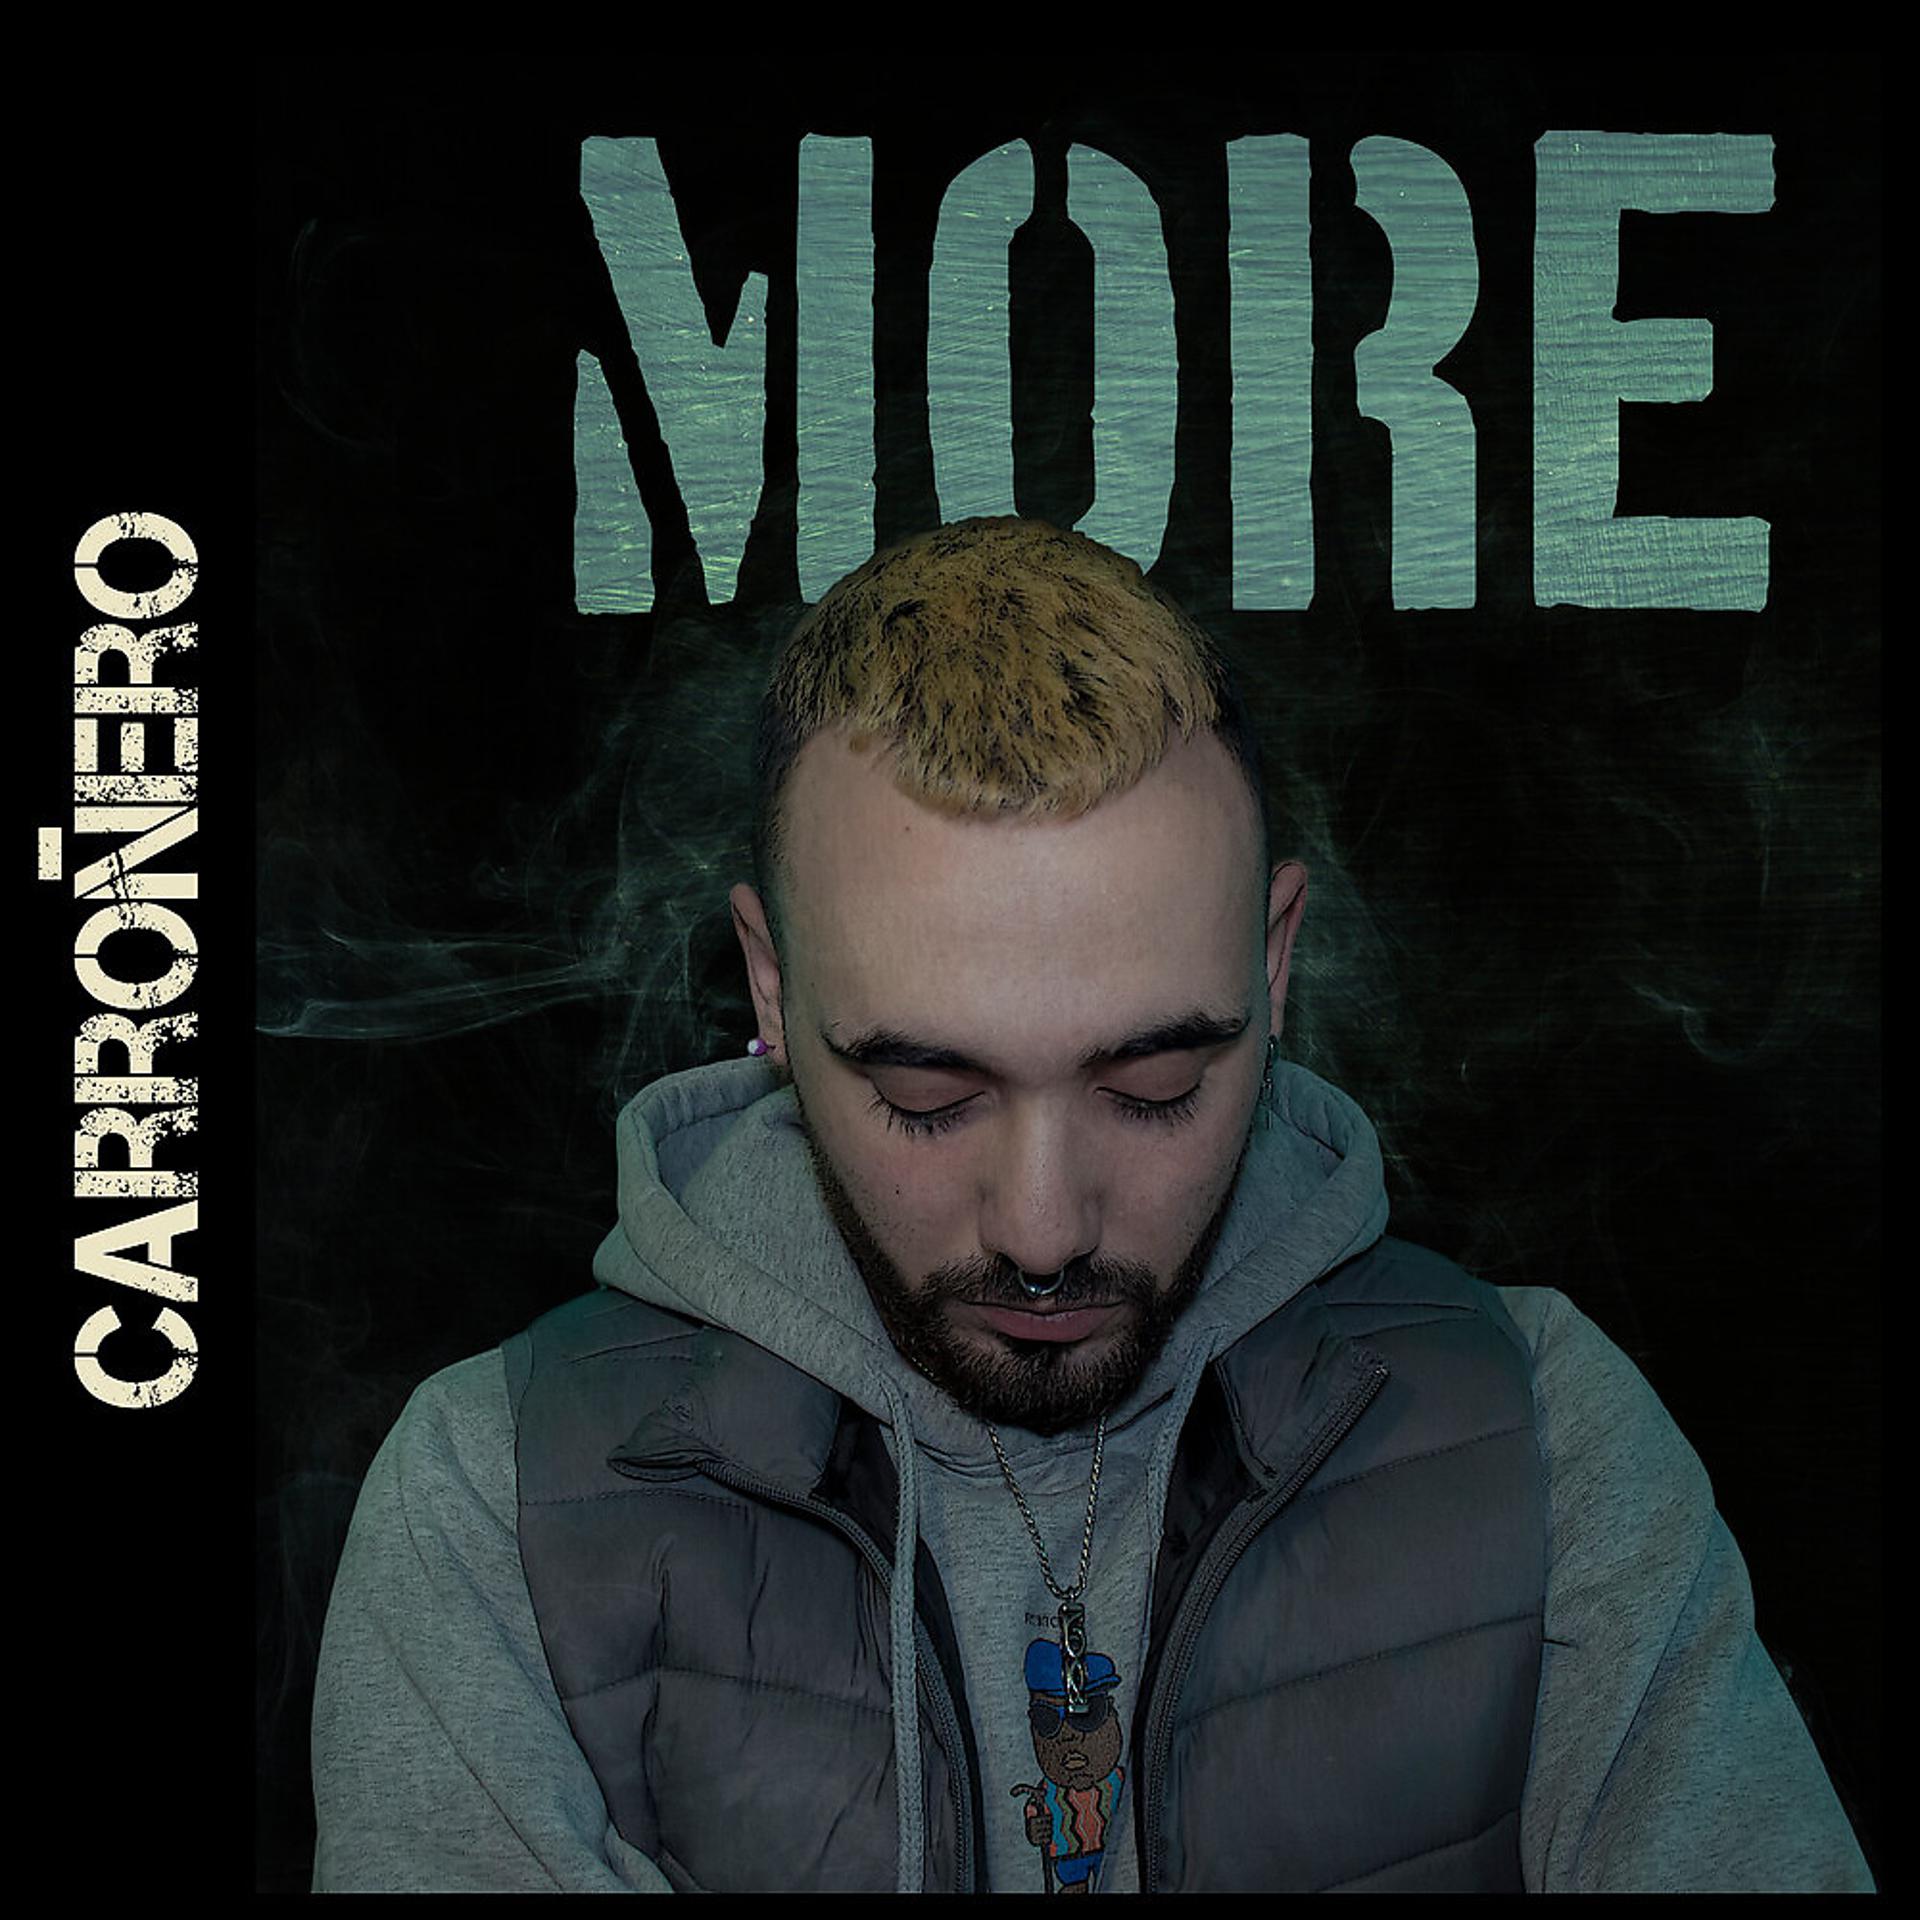 Постер альбома Carroñero